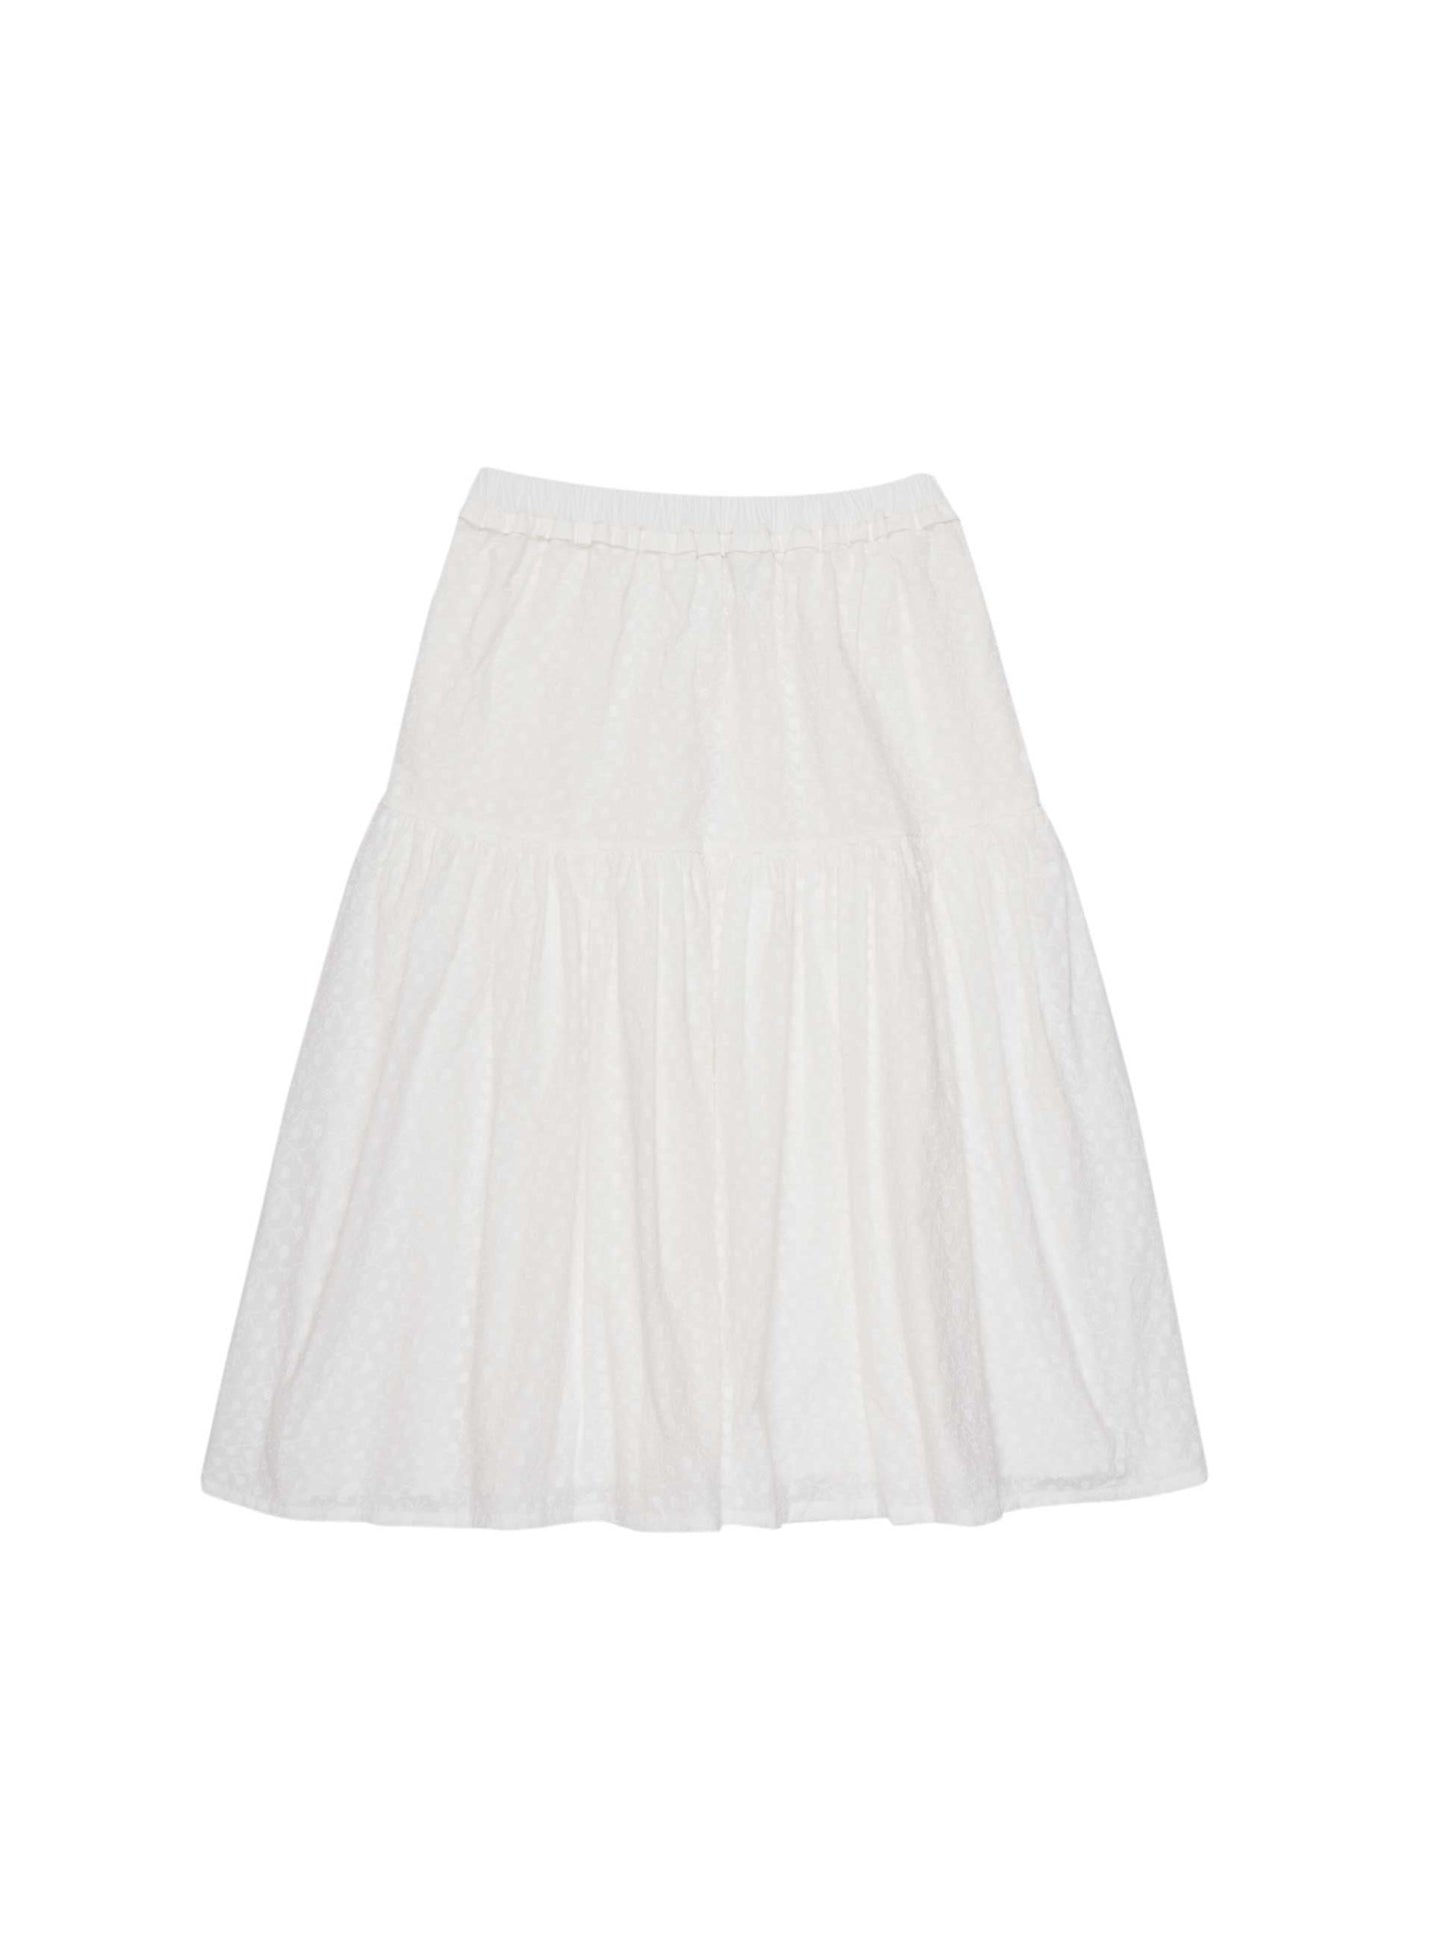 Antonella White Skirt